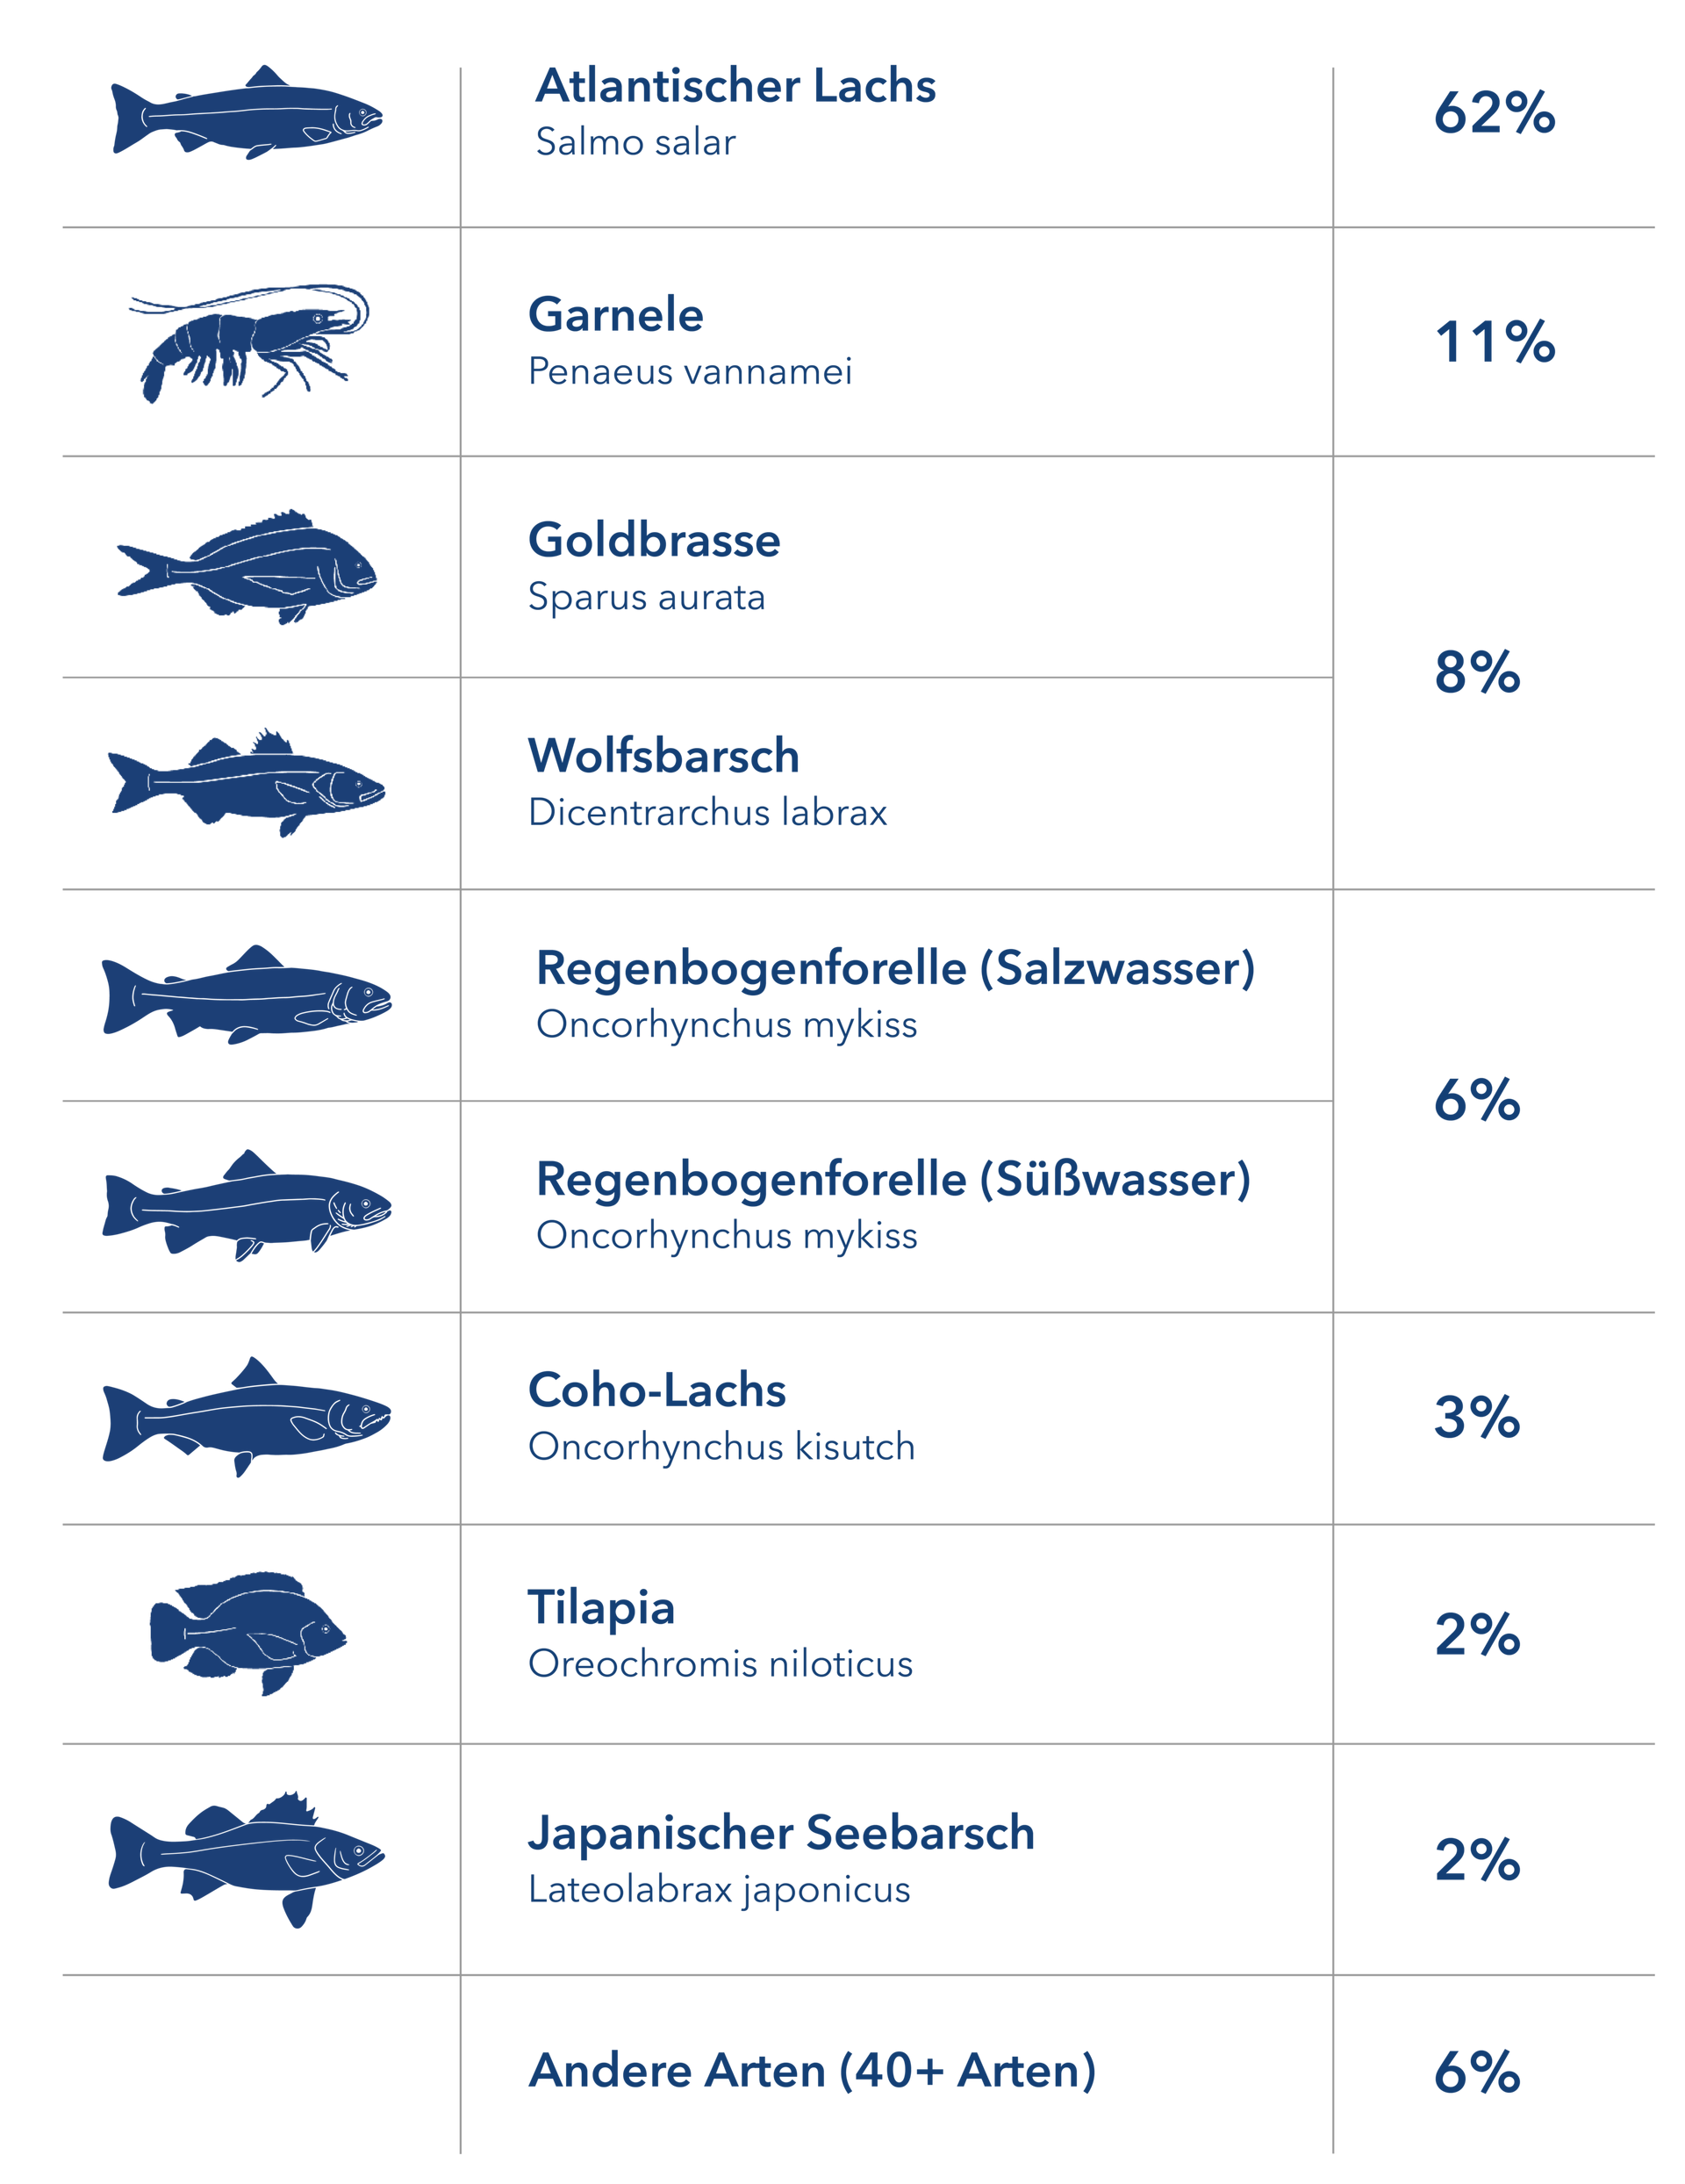 Species distribution fed by BioMar